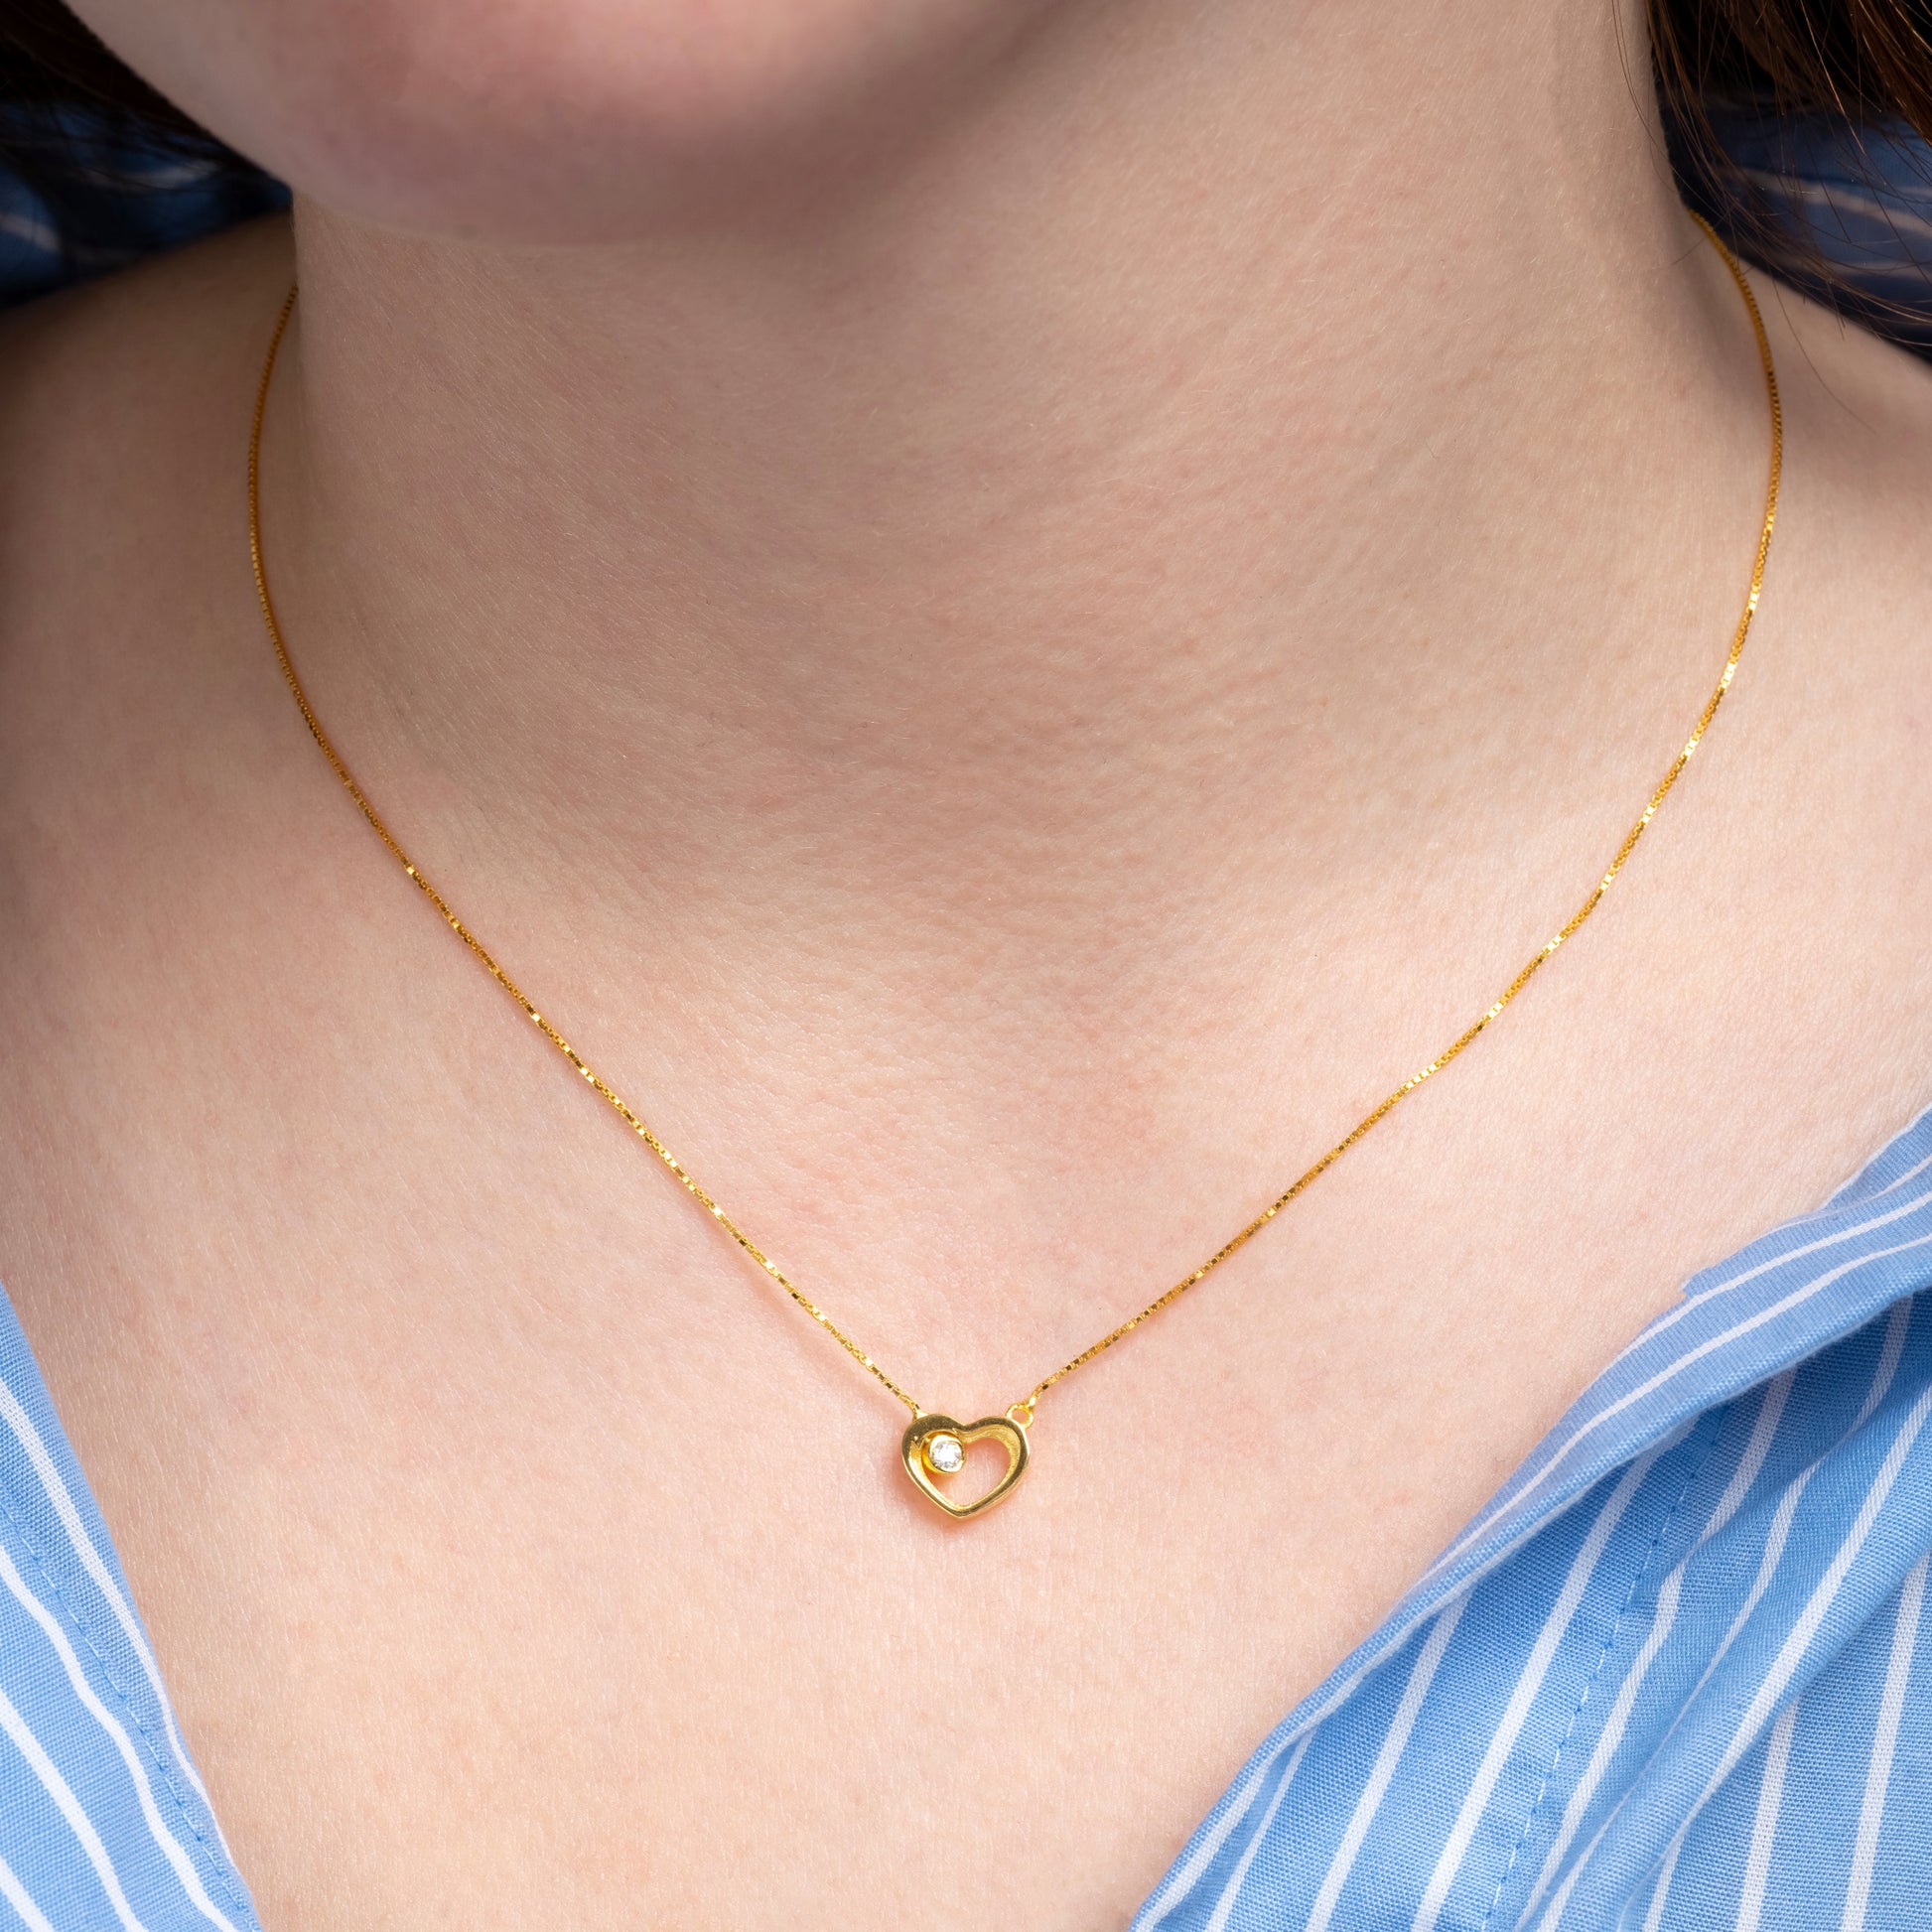 A model wearing Heart Shape Gold Necklace